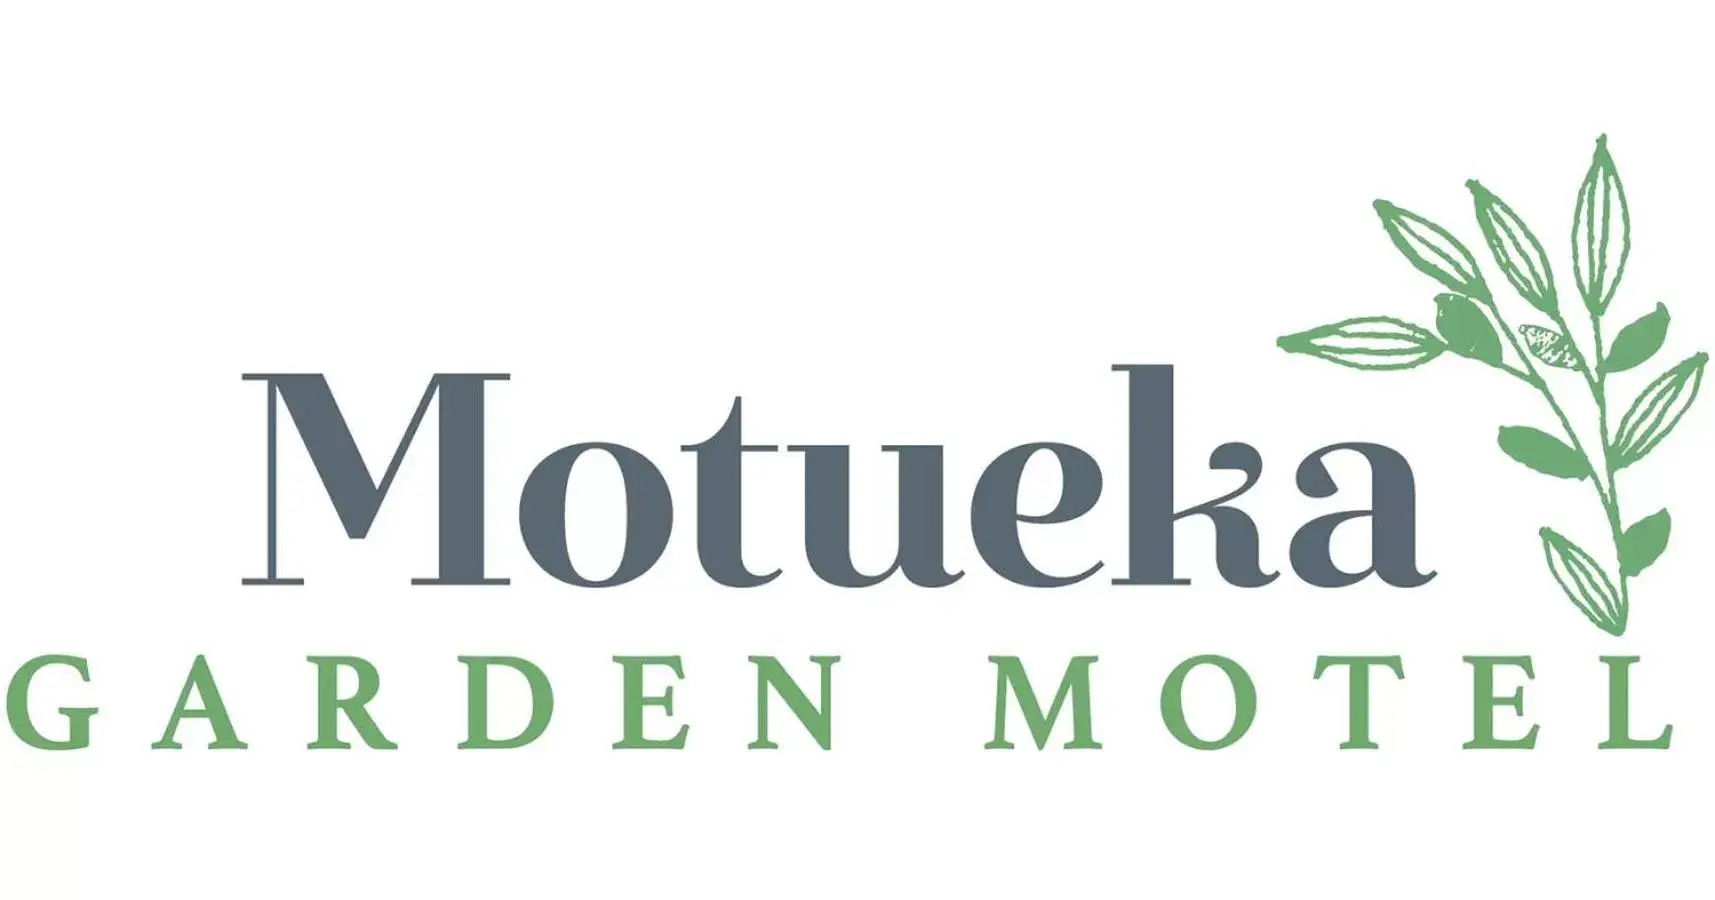 Property logo or sign in Motueka Garden Motel